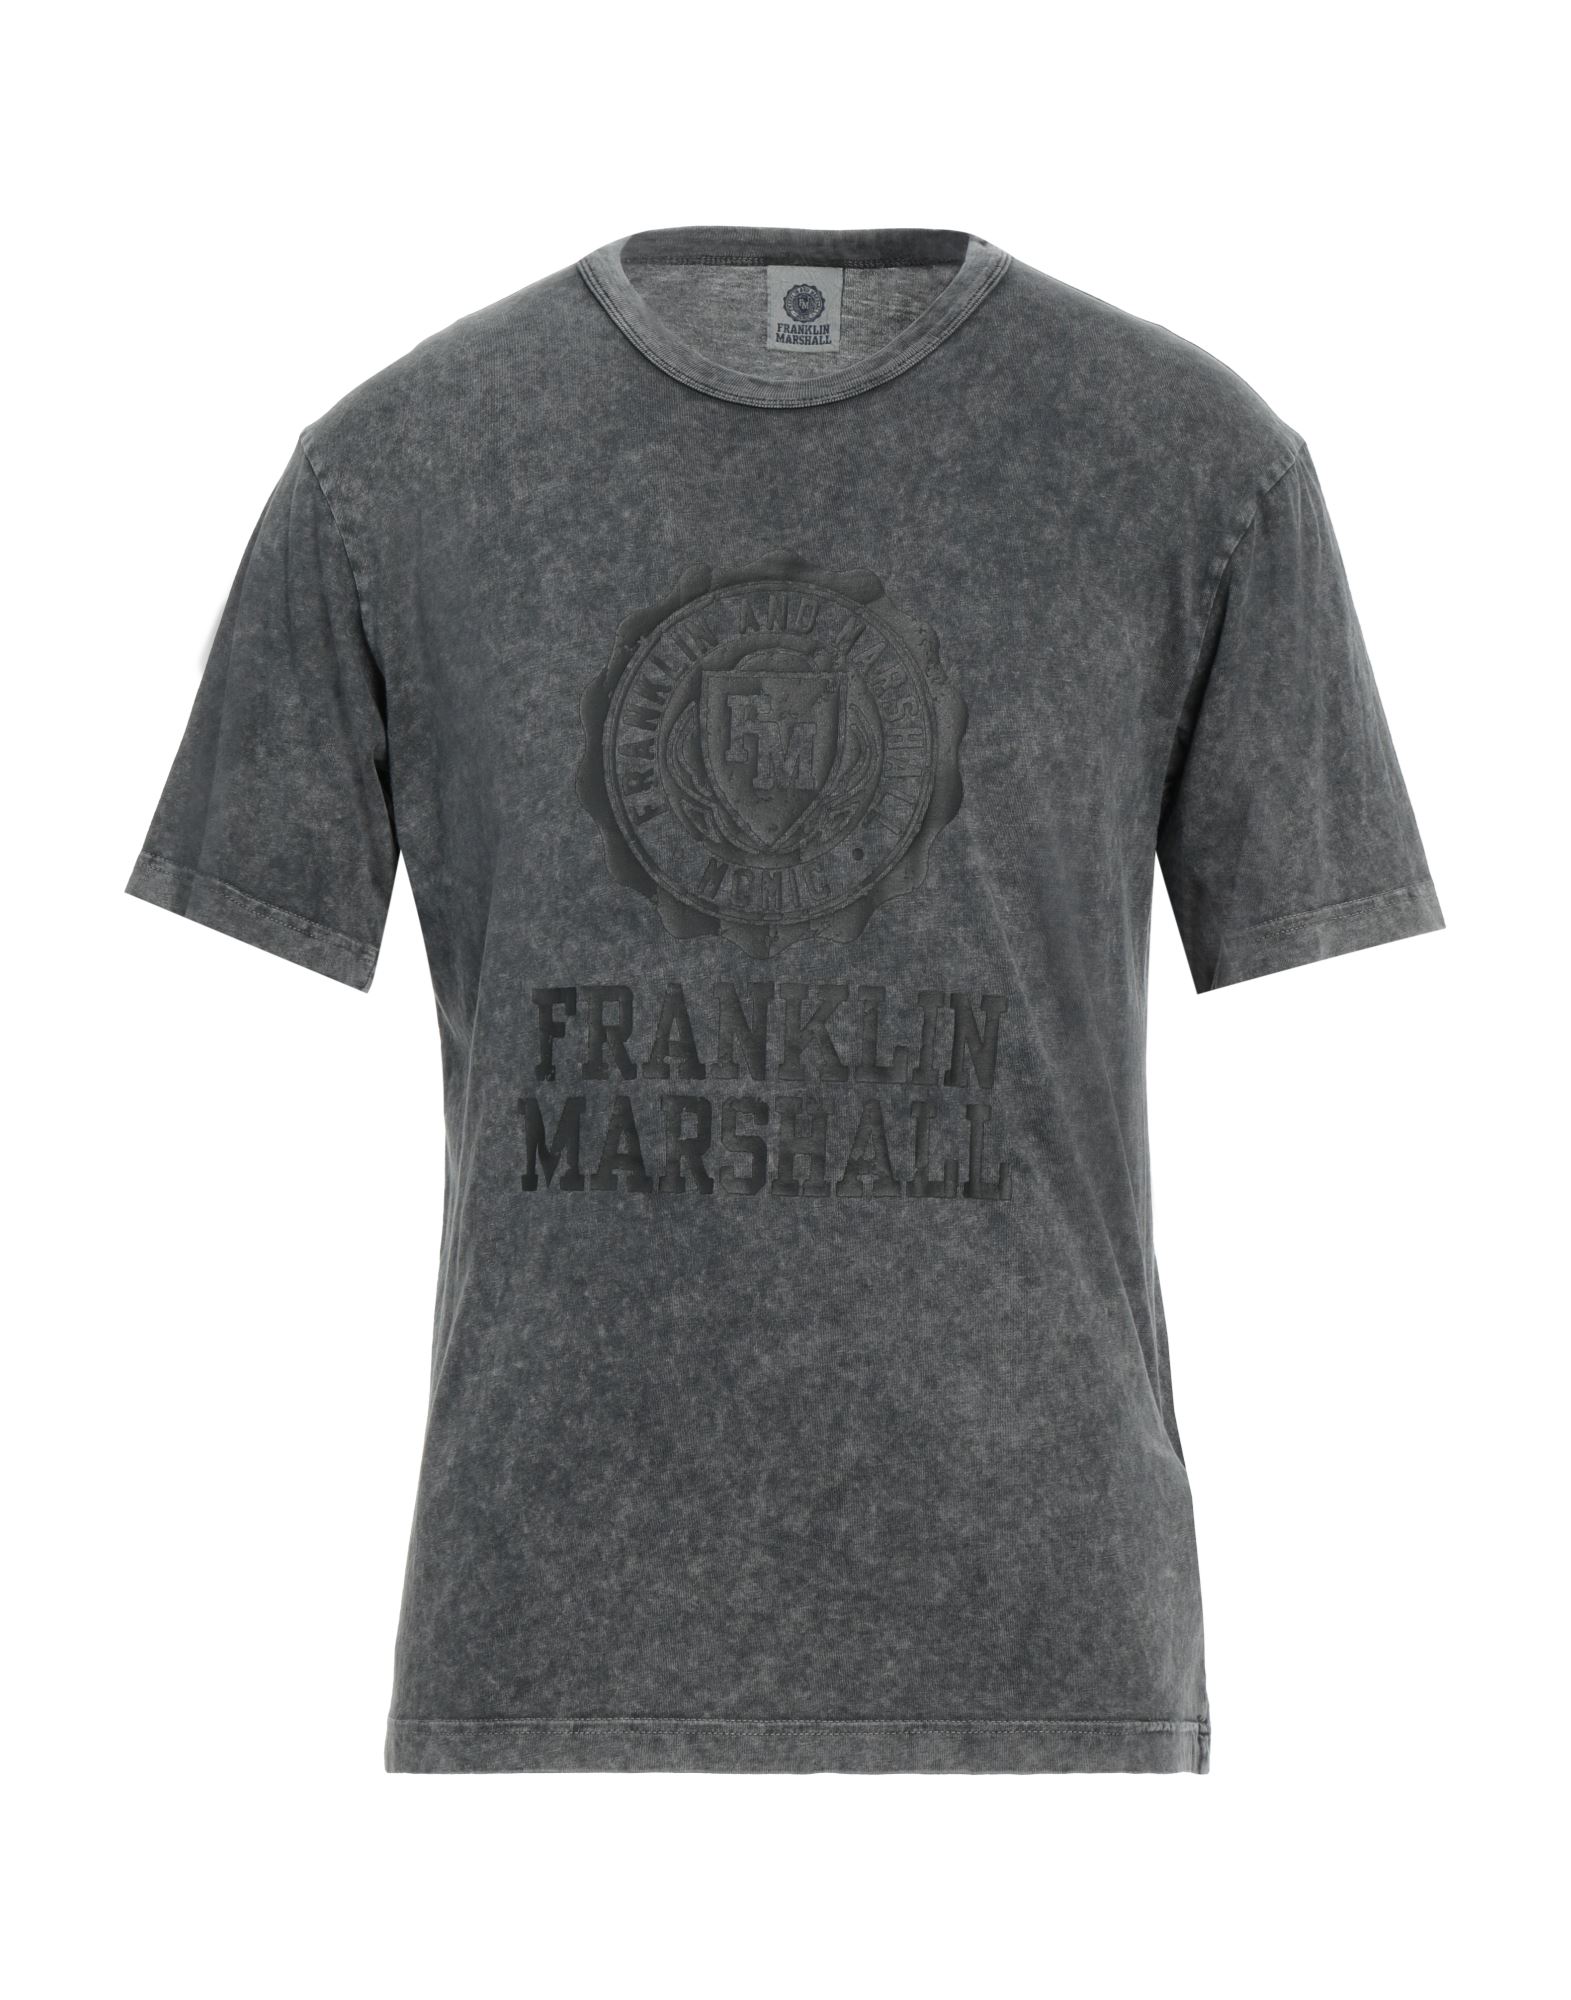 FRANKLIN & MARSHALL T-shirts Herren Granitgrau von FRANKLIN & MARSHALL